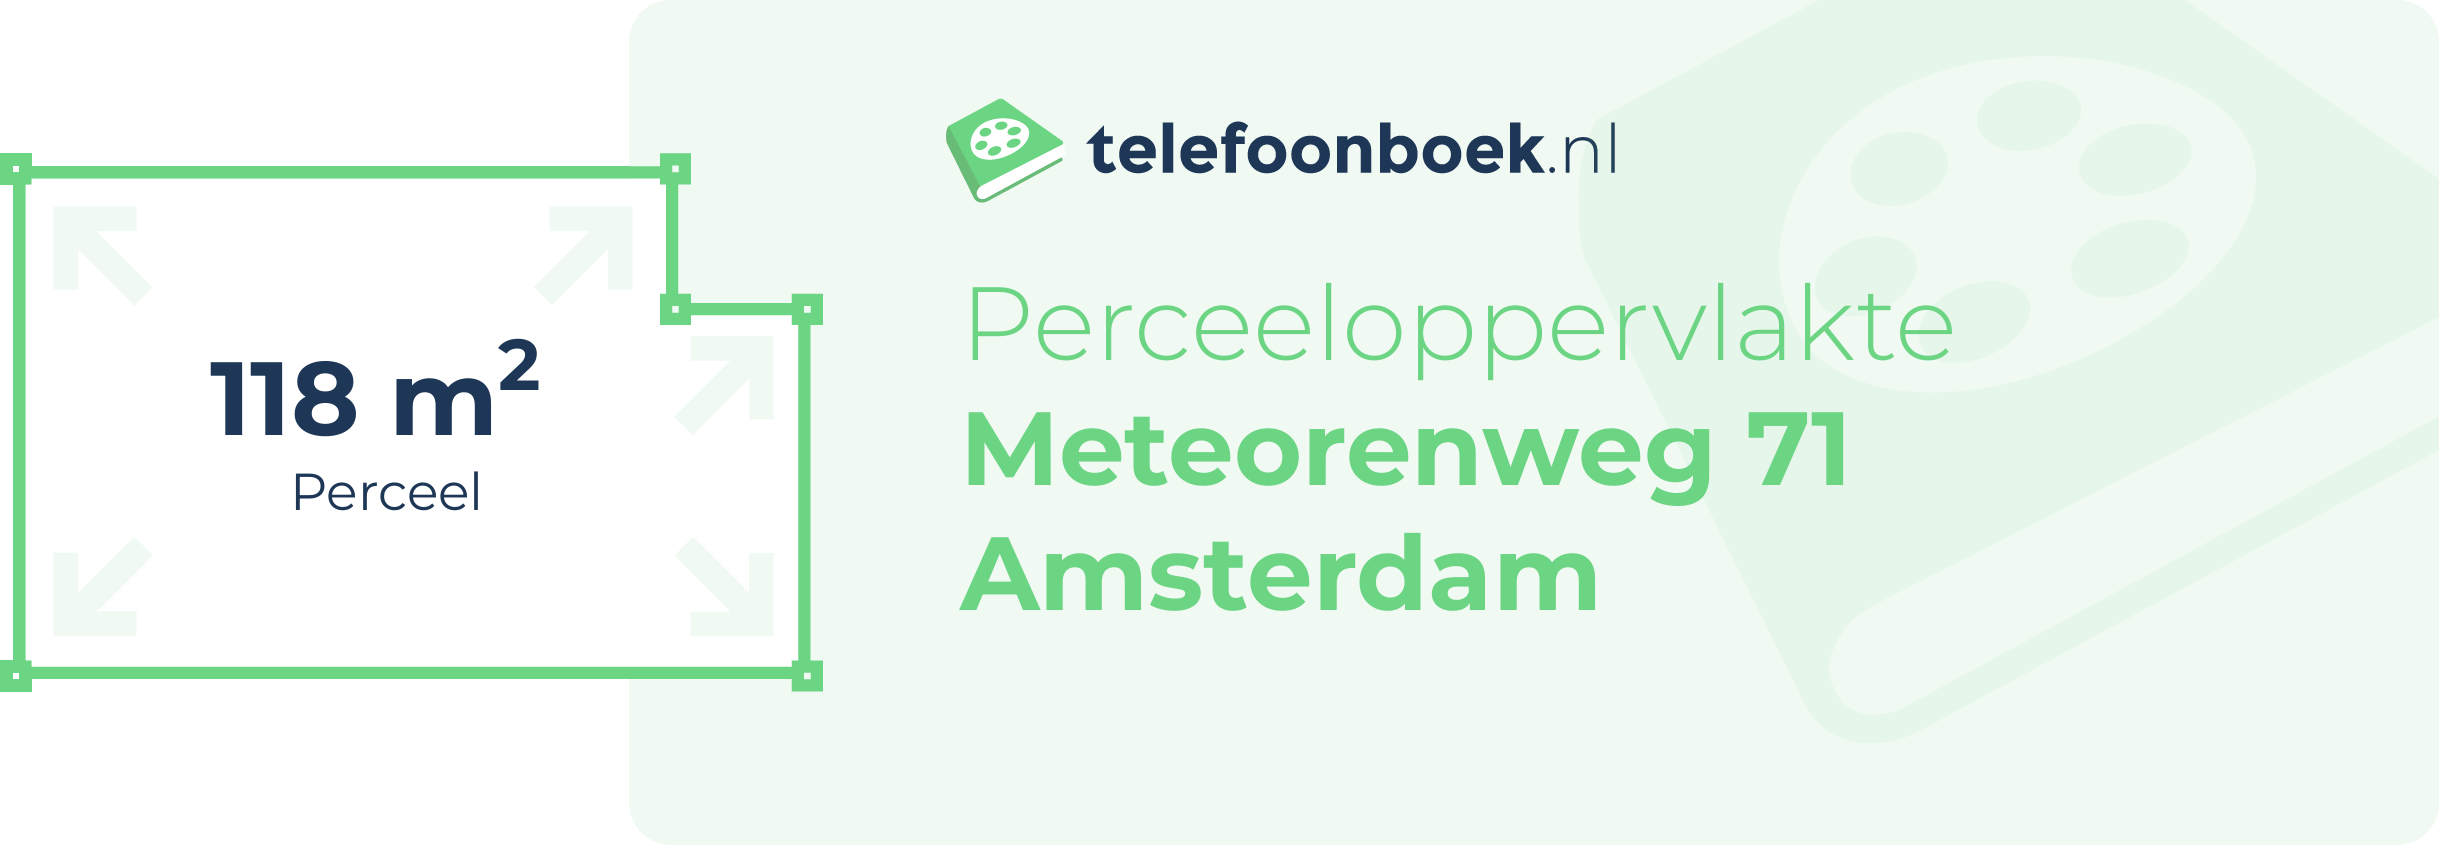 Perceeloppervlakte Meteorenweg 71 Amsterdam